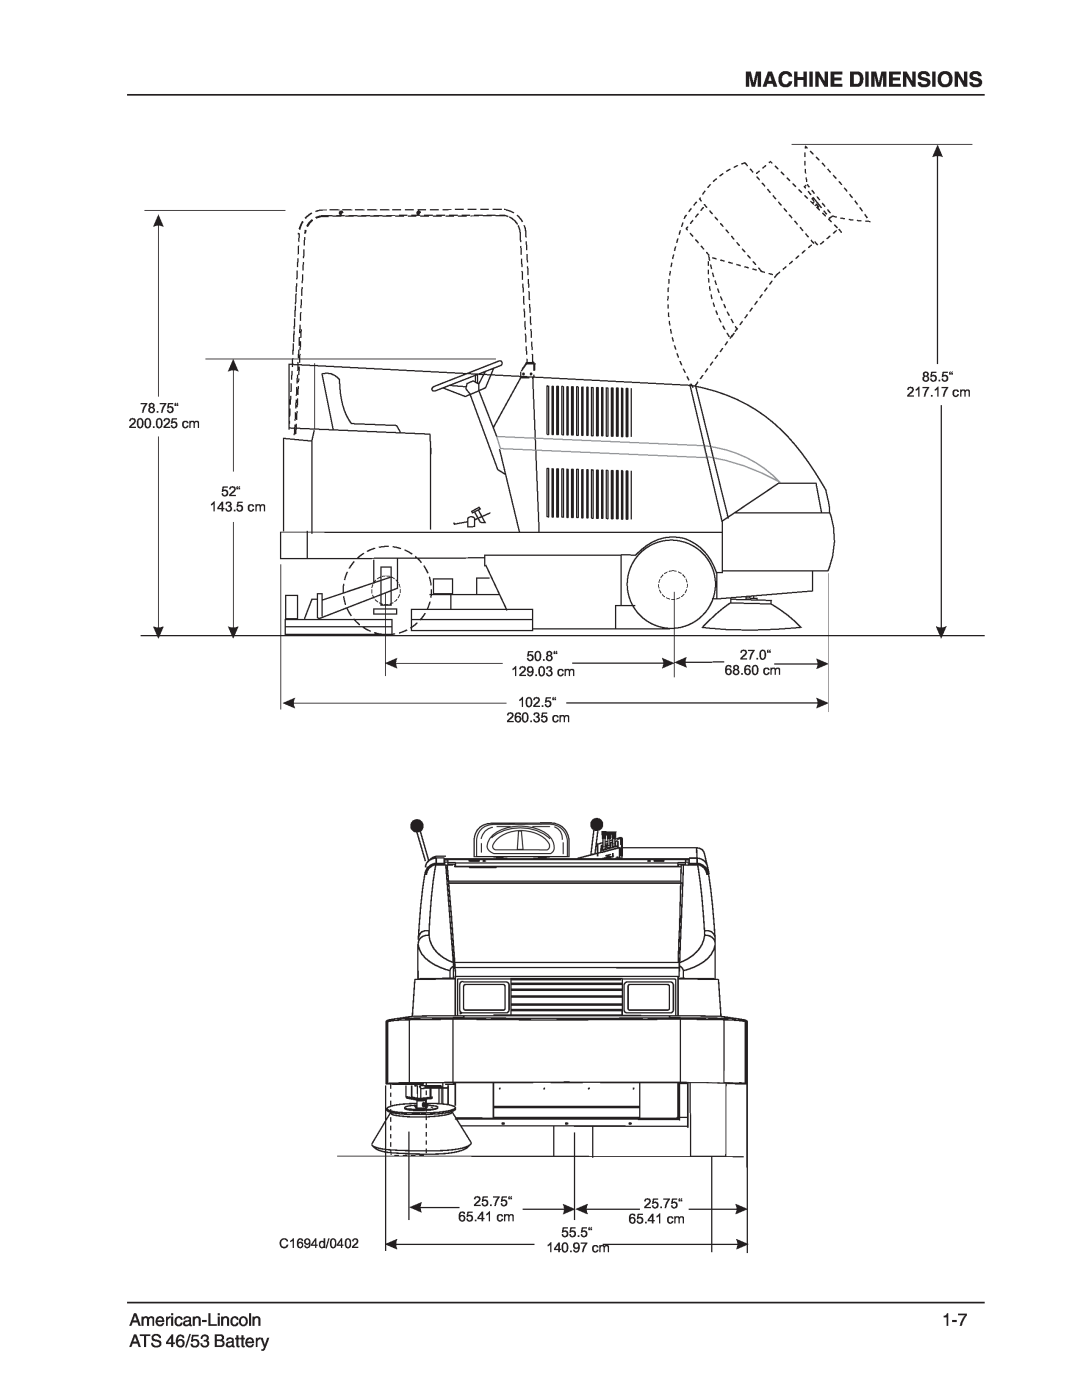 Nilfisk-ALTO manual Machine Dimensions, American-Lincoln, ATS 46/53 Battery, 65.41 cm, 140.97 cm 